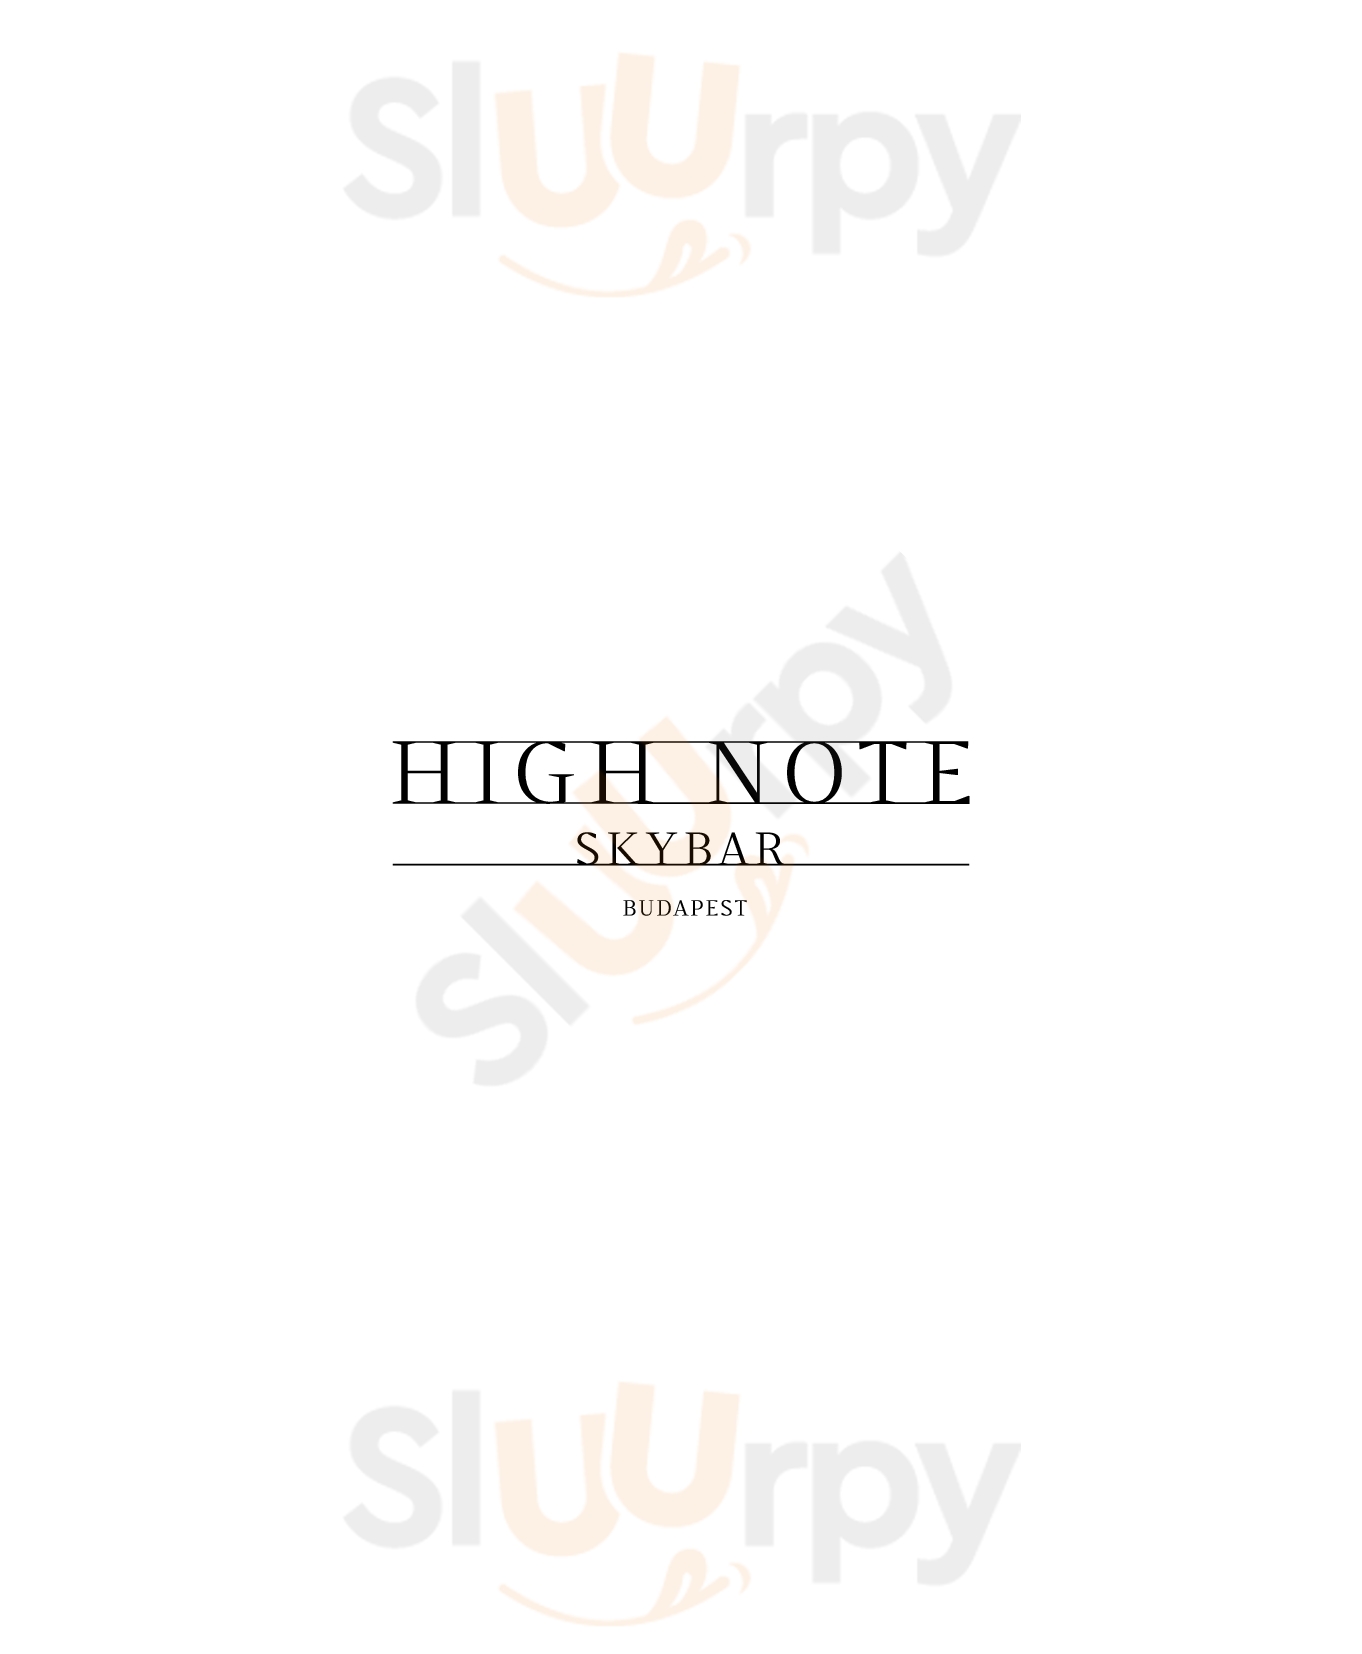 High Note Skybar Budapest Menu - 1